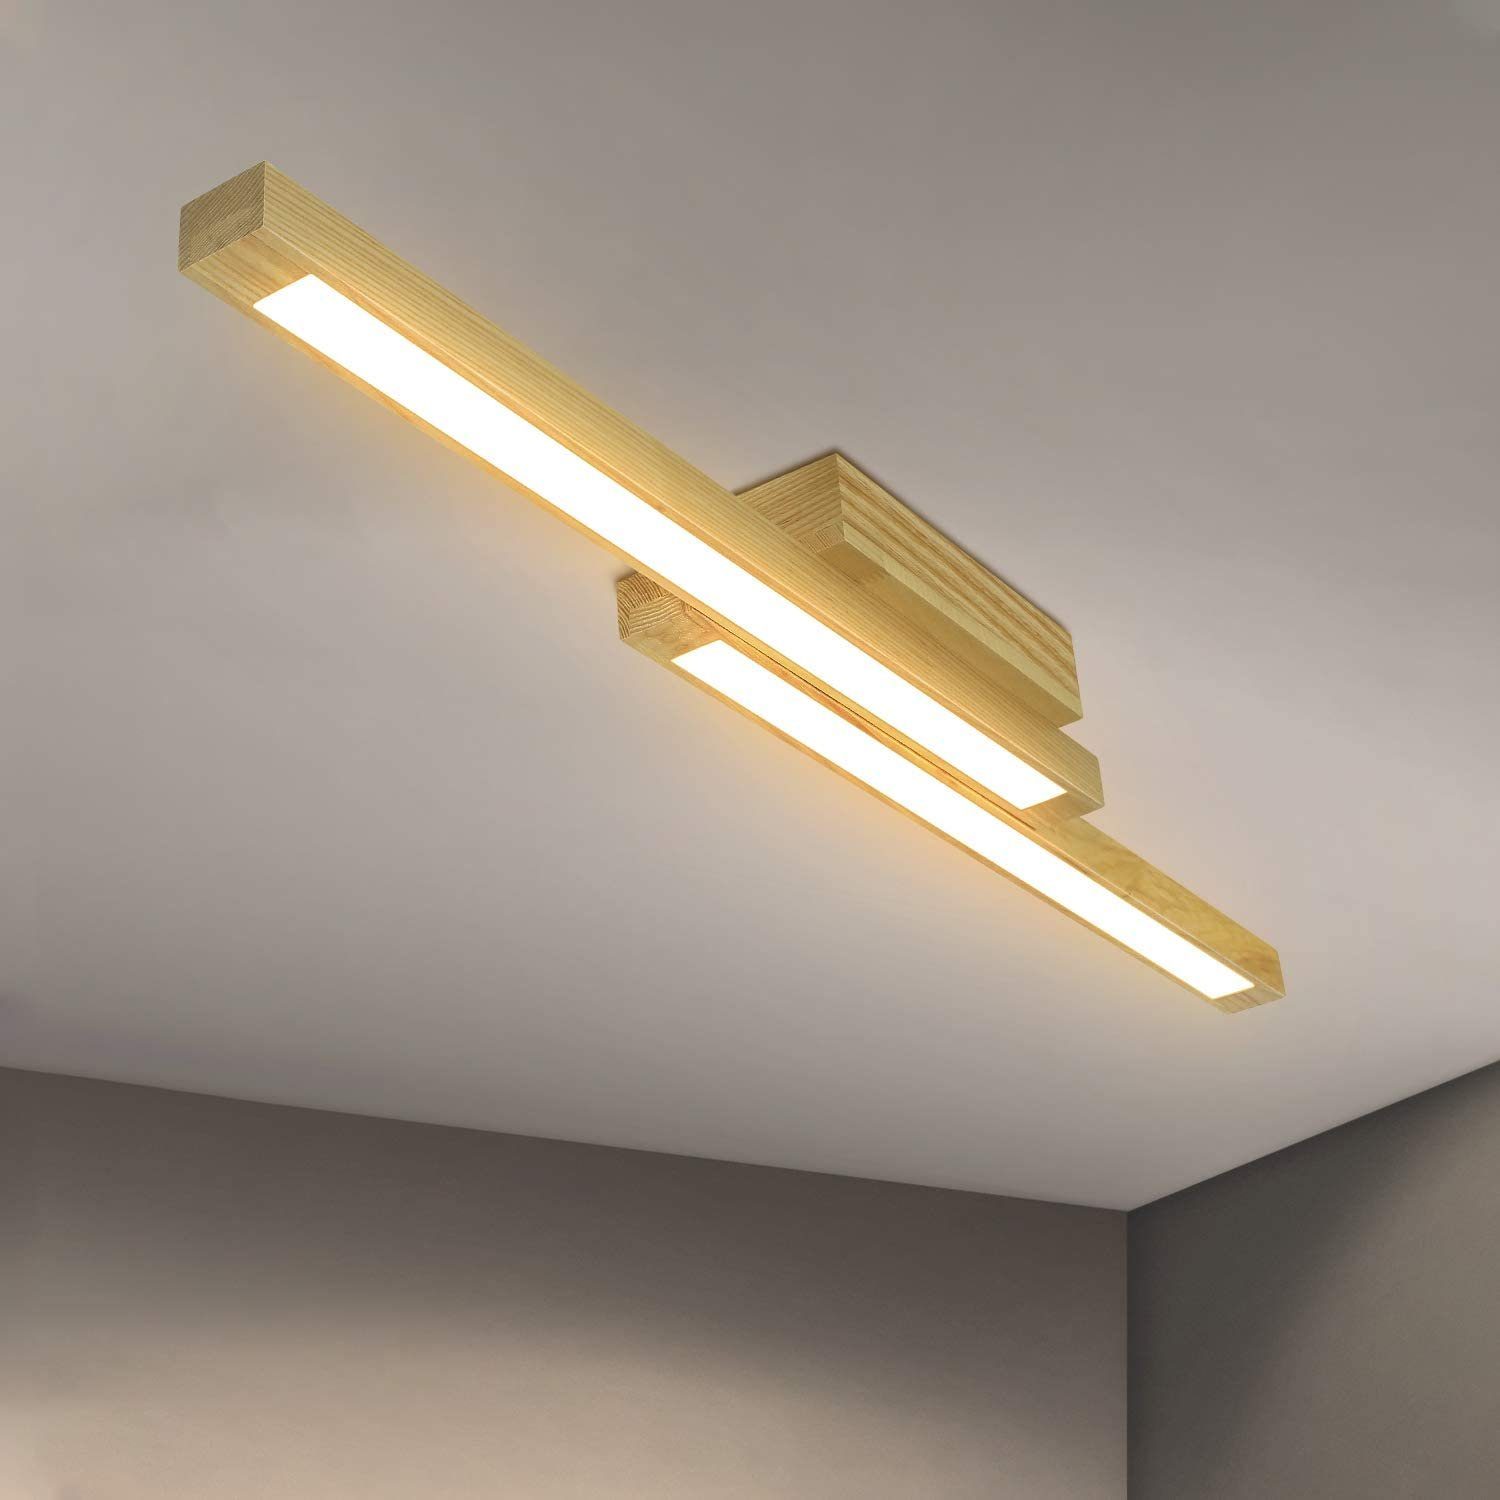 ZMH LED Deckenleuchte 3000K Holz Wohnzimmerlampe 114cm Lang 2-flammig, LED  fest integriert, Warmweiß